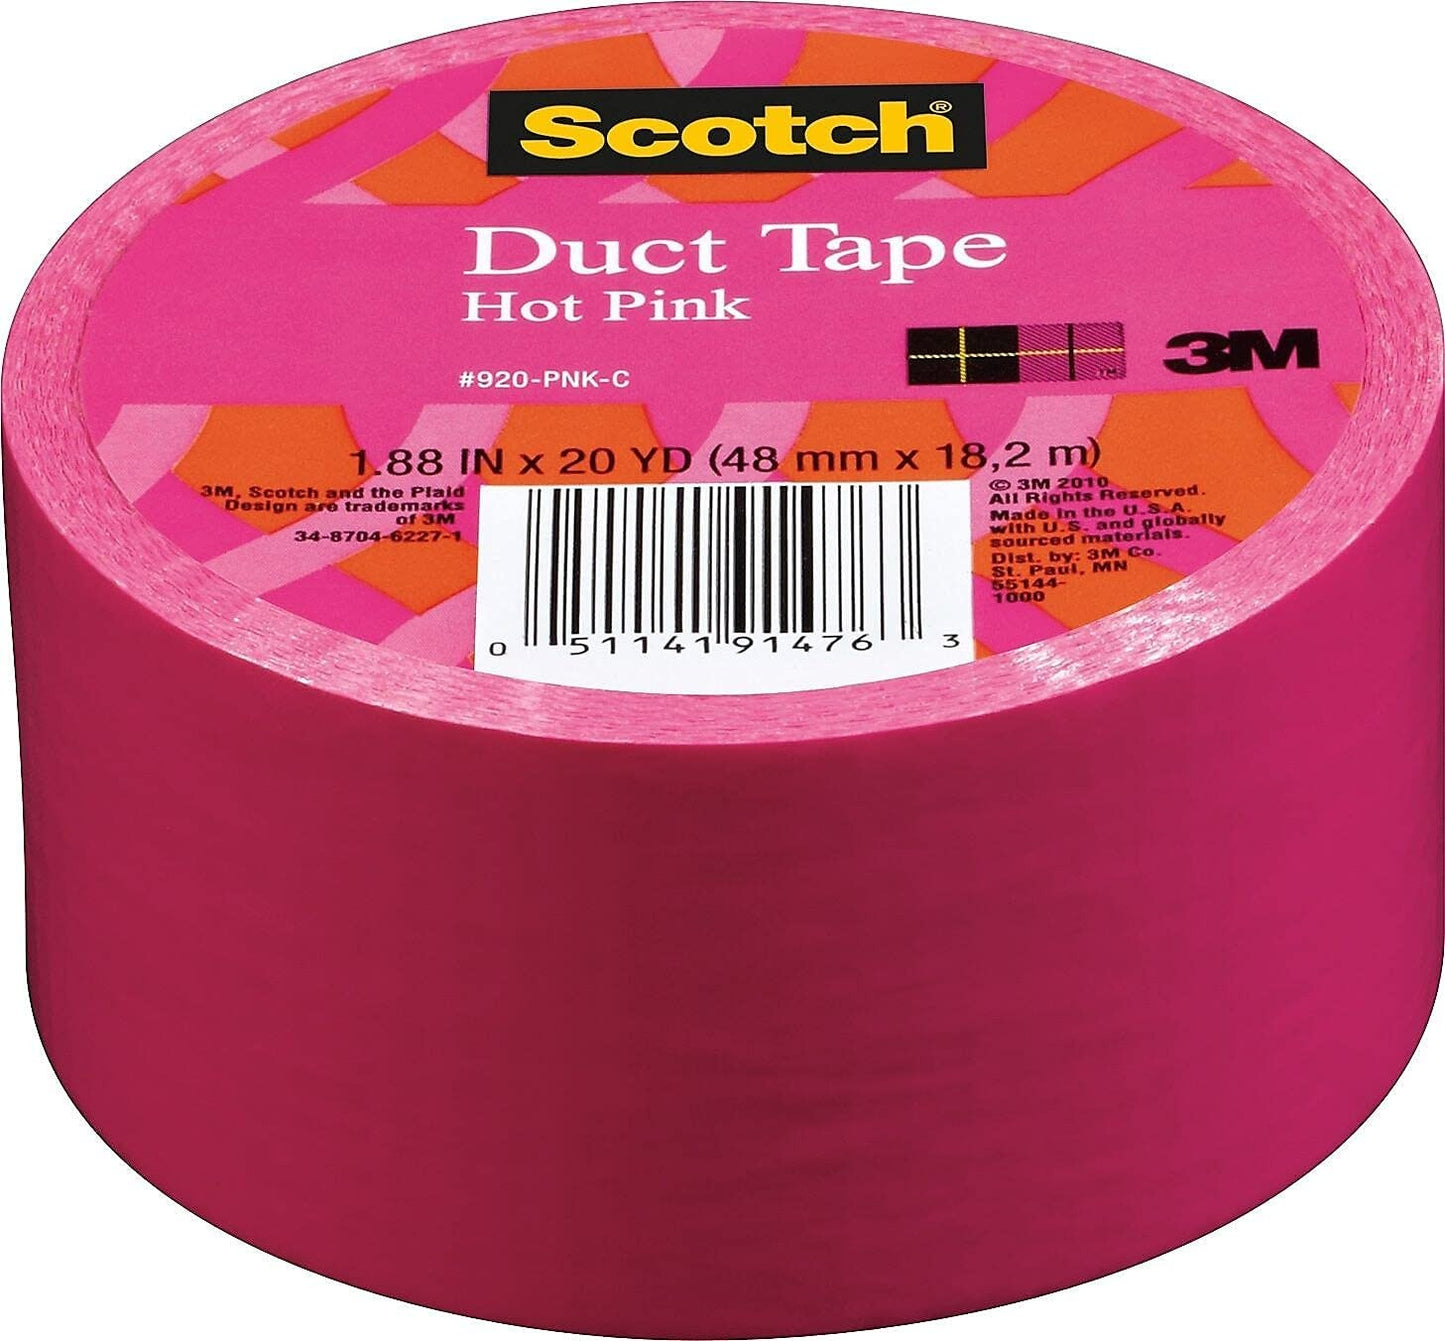 3M Scotch Duct Tape, 1.88 in x 20 yd (48 mm x 18,2 m), Pink #920-PNK-C